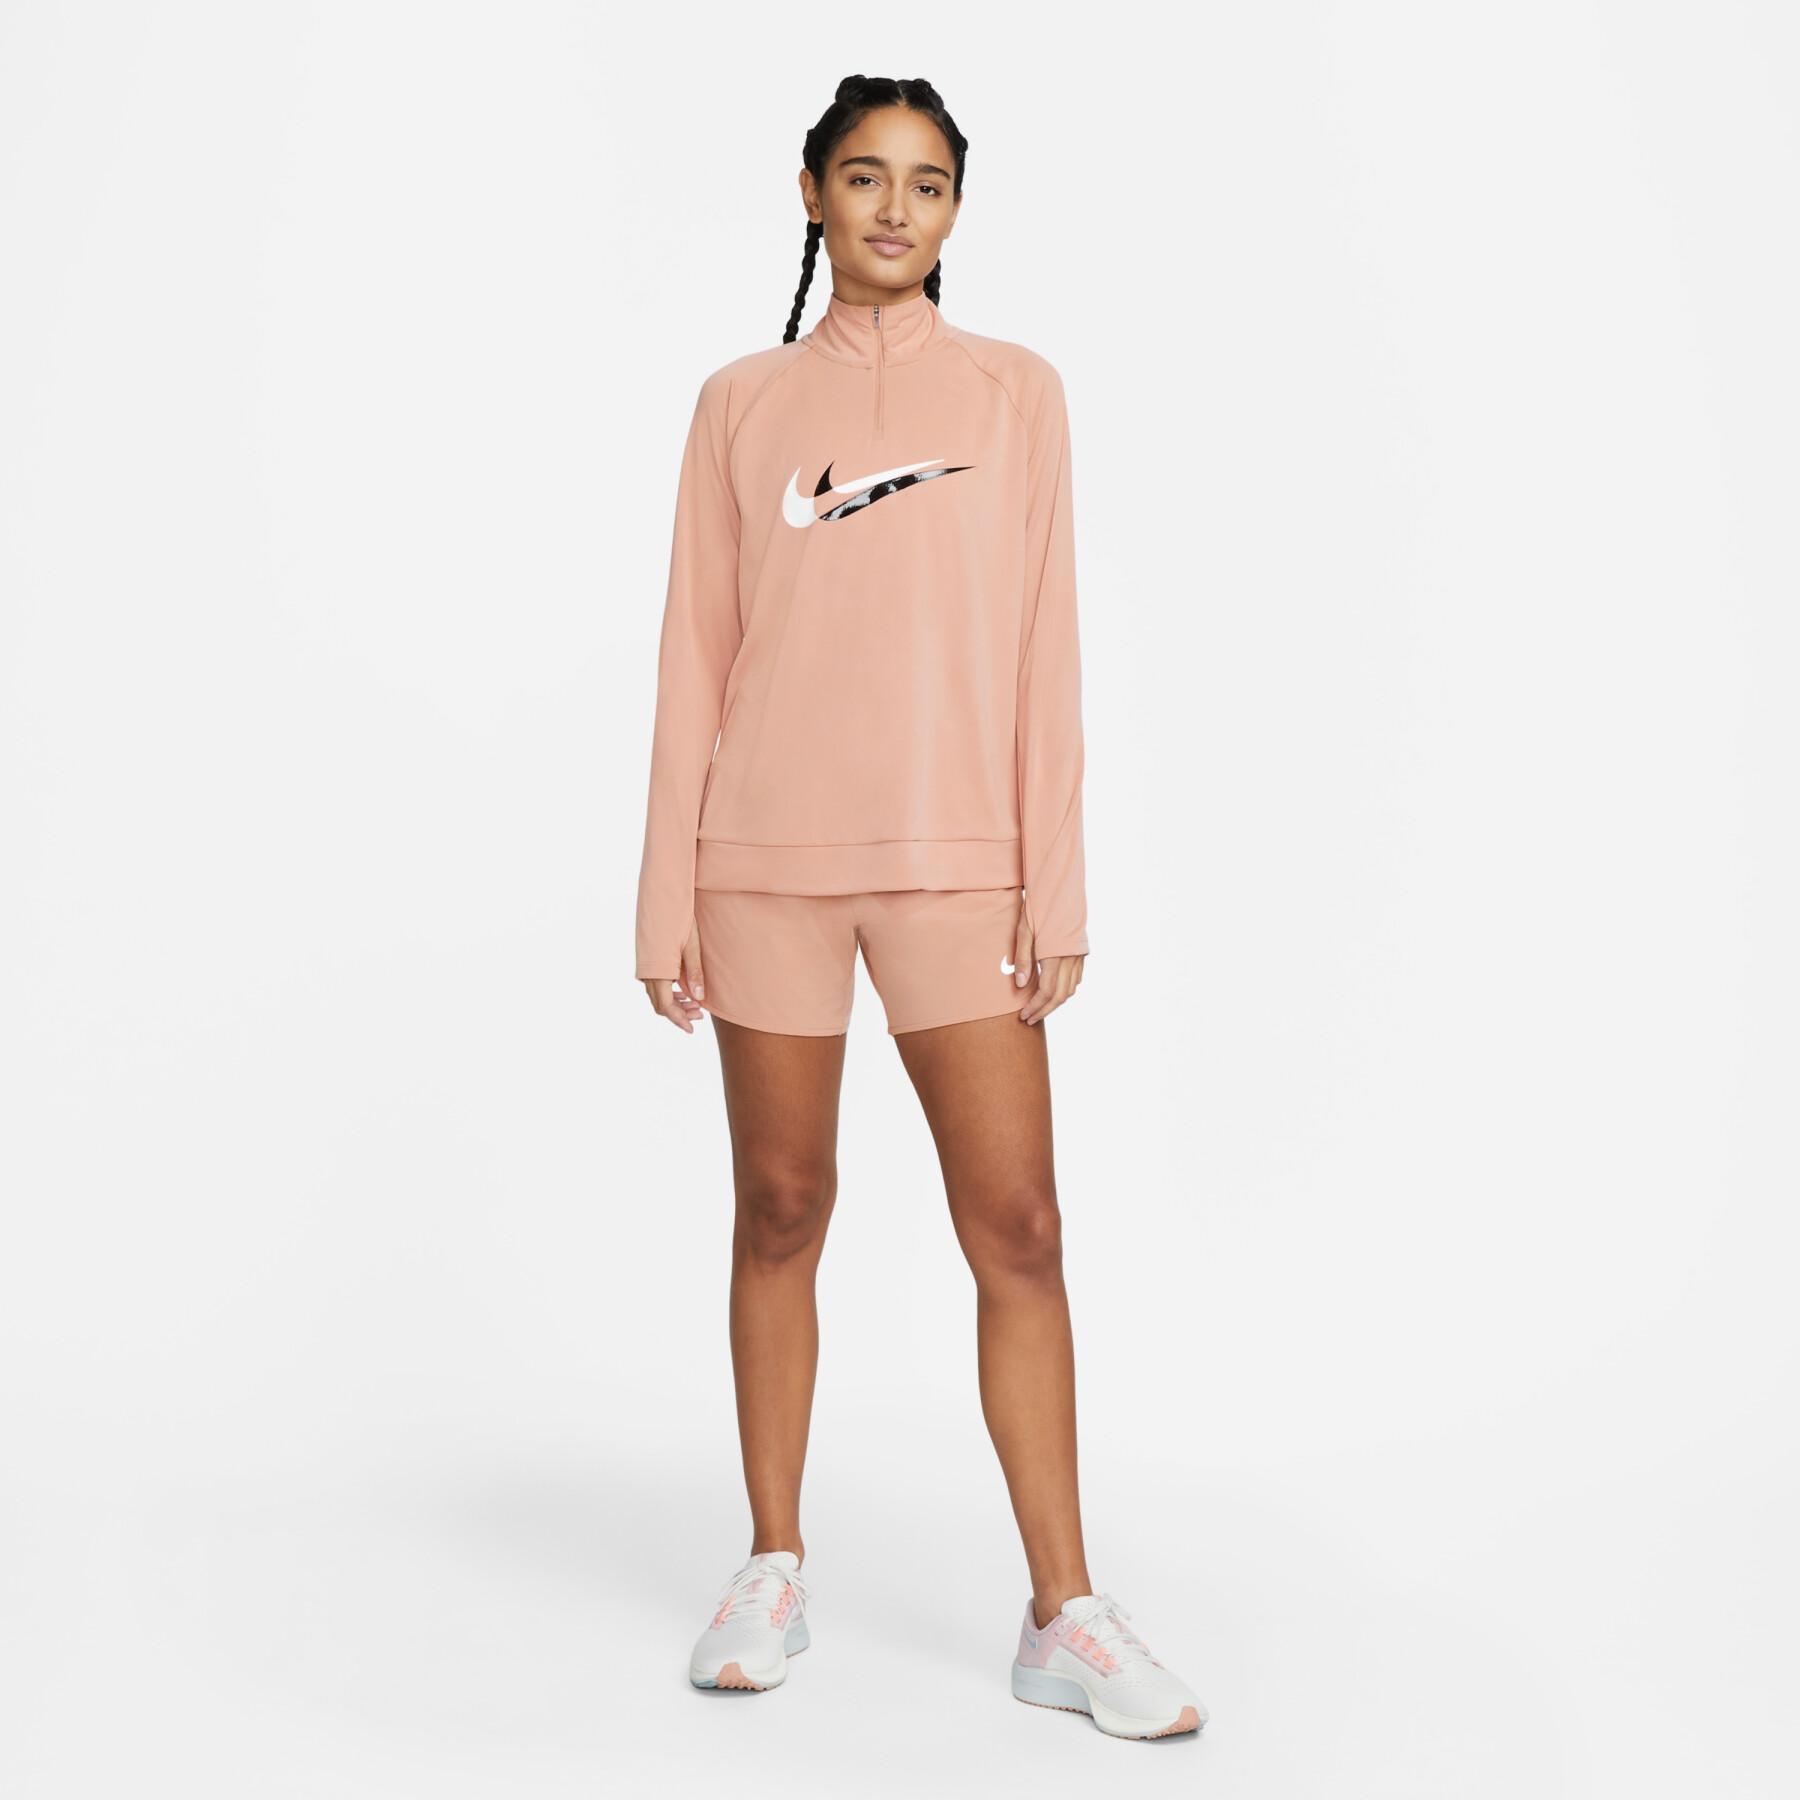 Sweatshirt woman Nike Dri-FIT Swoosh run